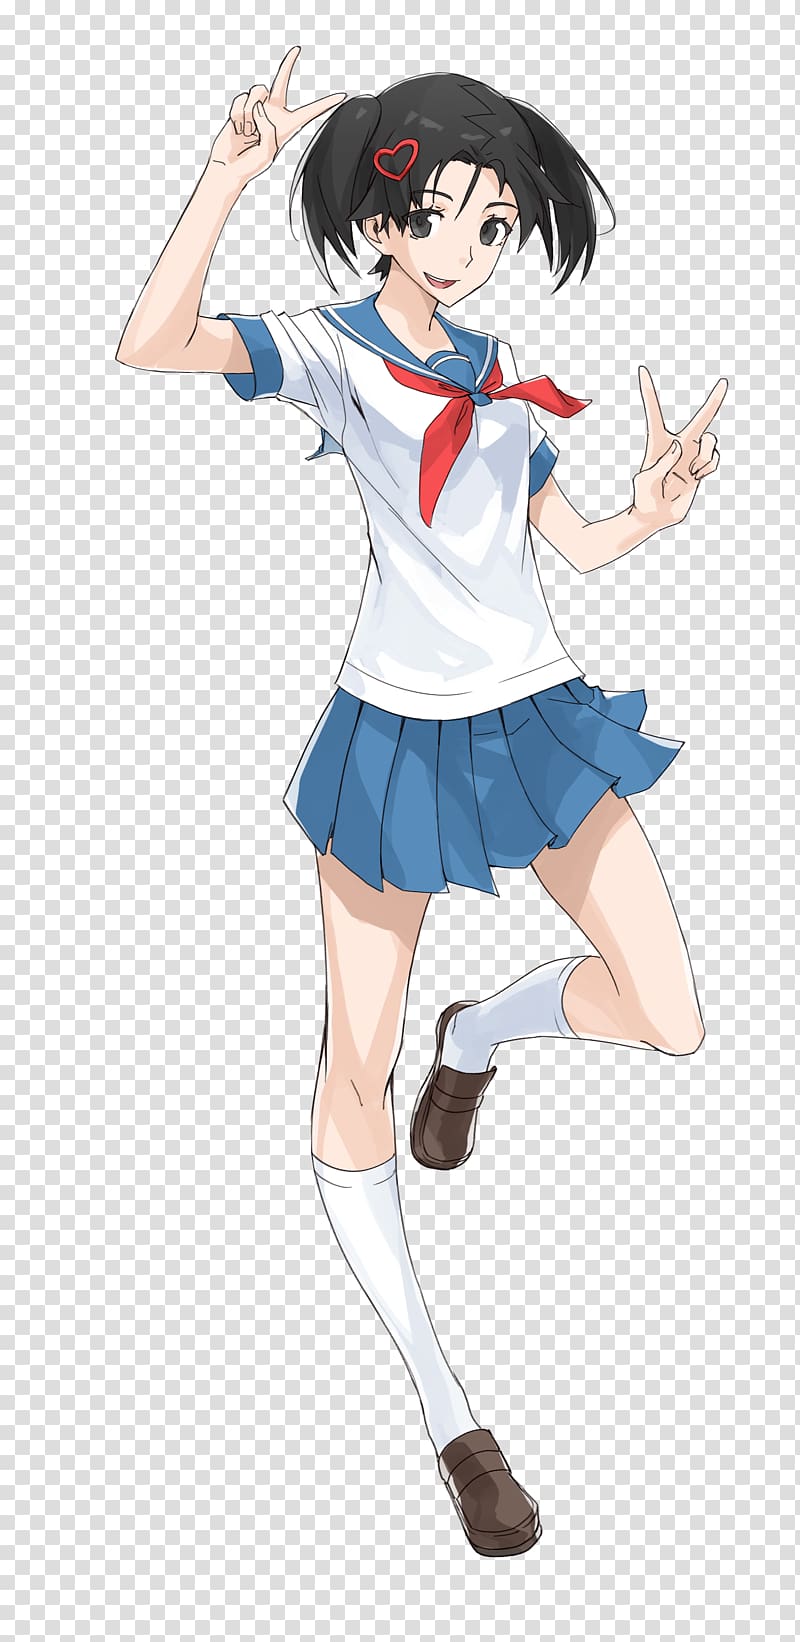 Yandere Simulator Senpai and kōhai Anime Otaku, Anime transparent background PNG clipart